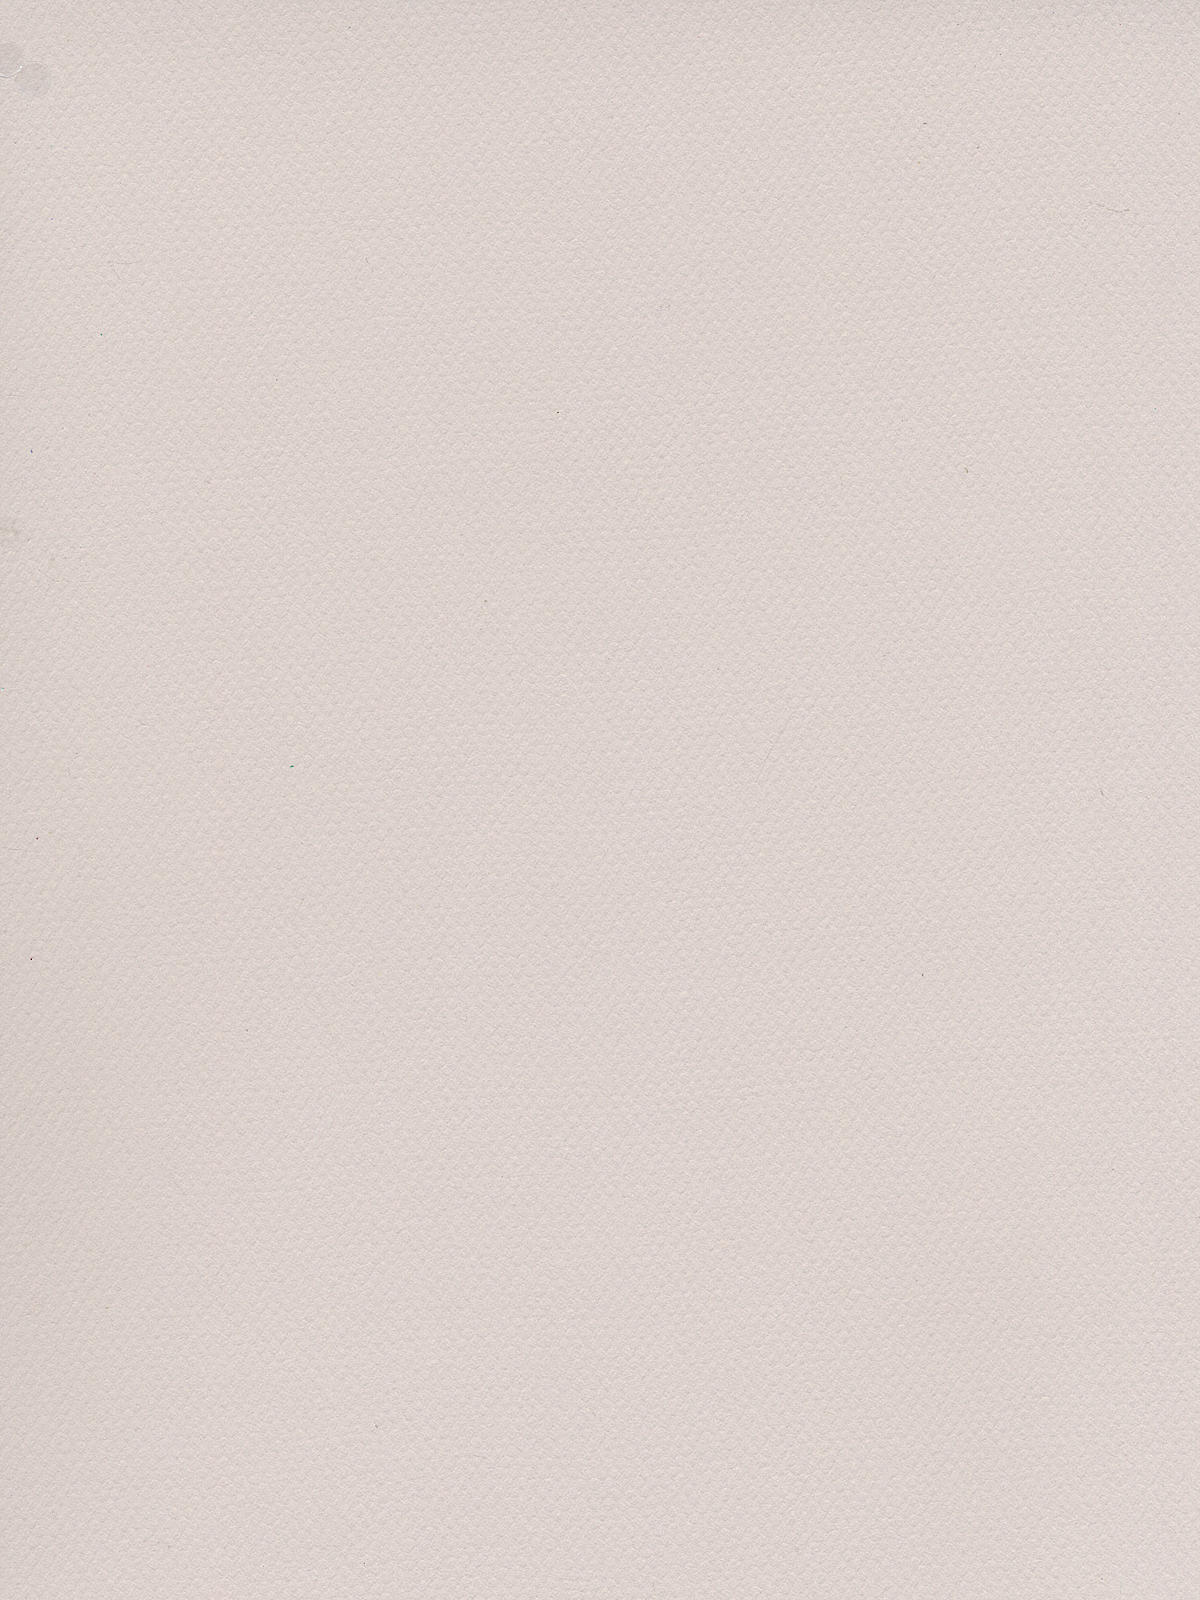 Mi-teintes Tinted Paper Pearl Grey 19 In. X 25 In.